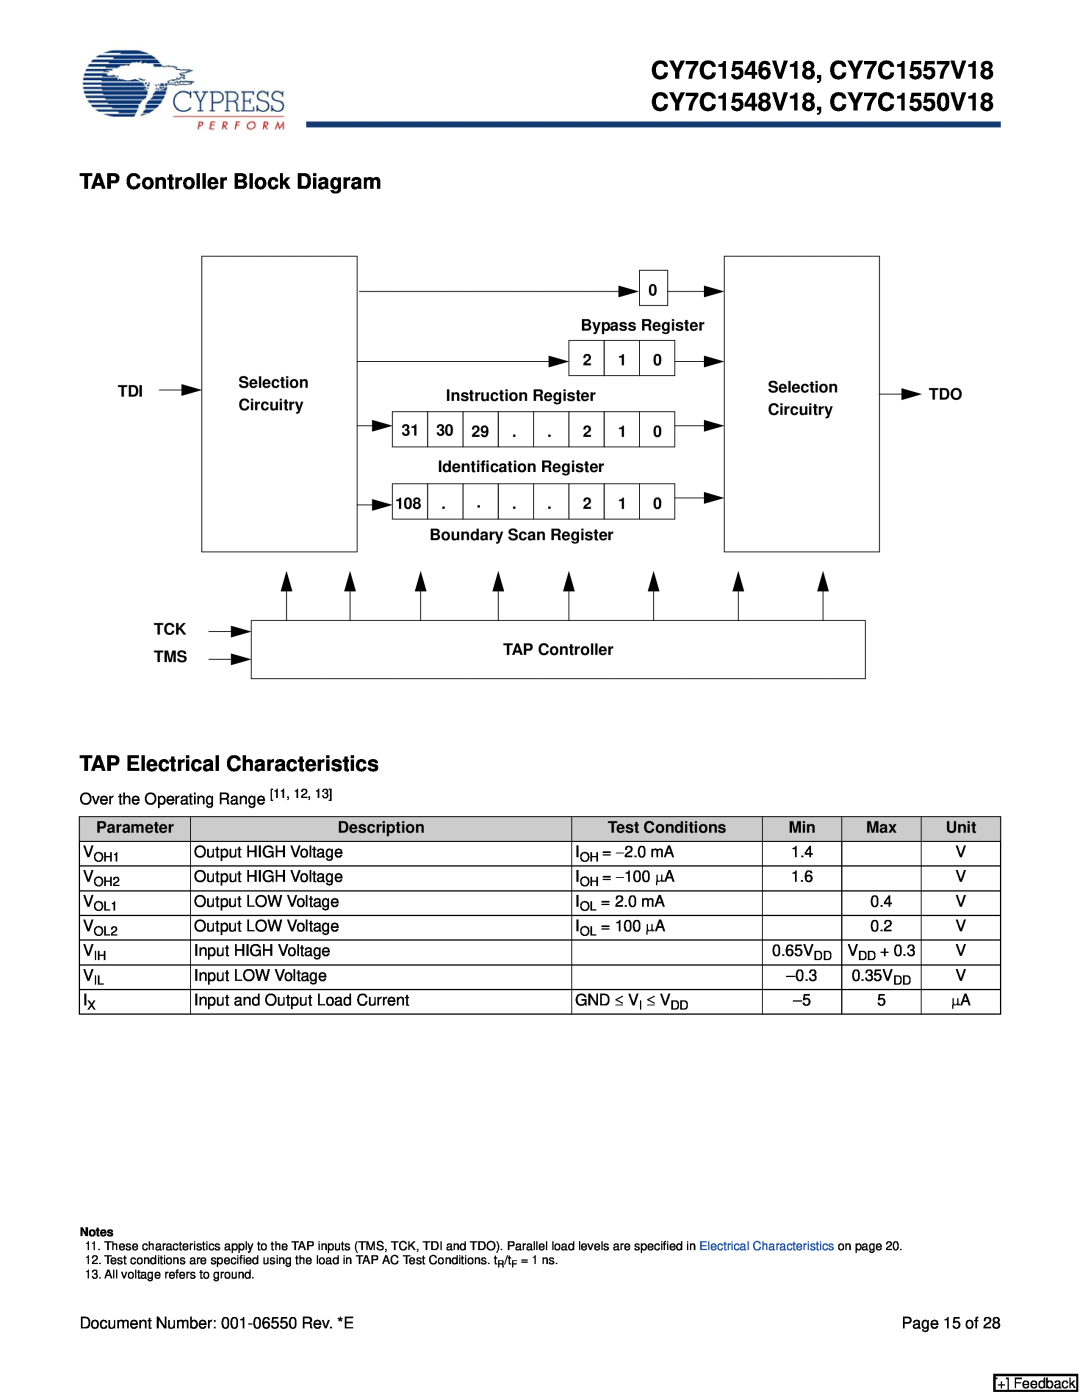 Cypress CY7C1557V18, CY7C1548V18, CY7C1546V18, CY7C1550V18 manual TAP Controller Block Diagram, TAP Electrical Characteristics 